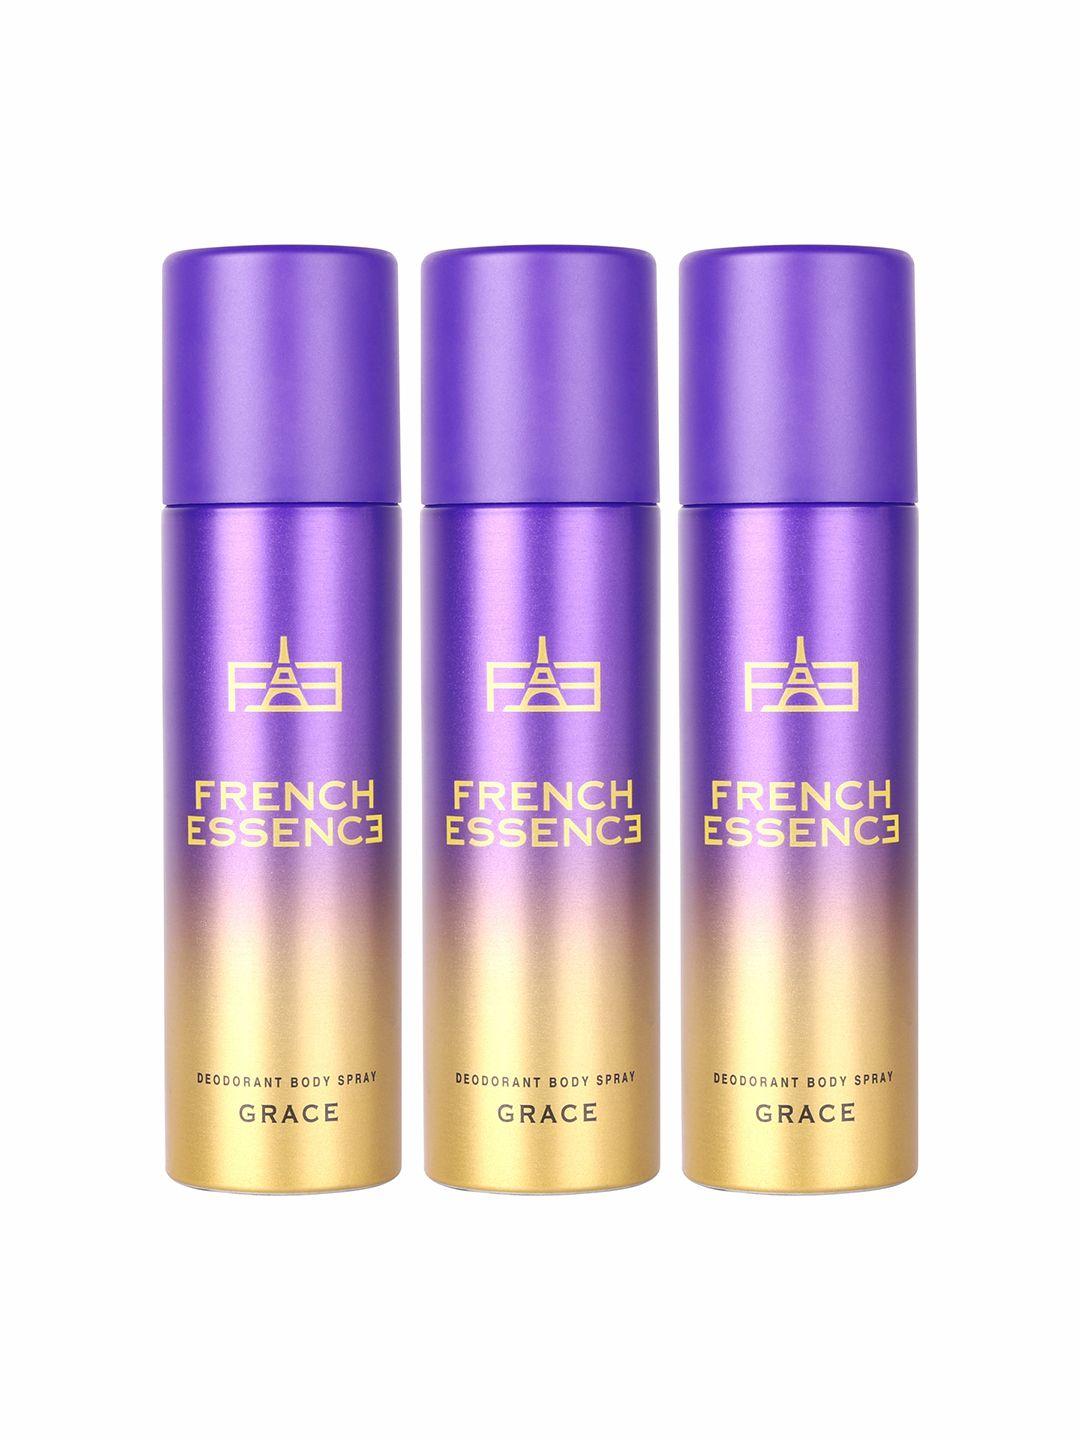 french essence women set of 3 grace long lasting deodorant body spray - 150ml each